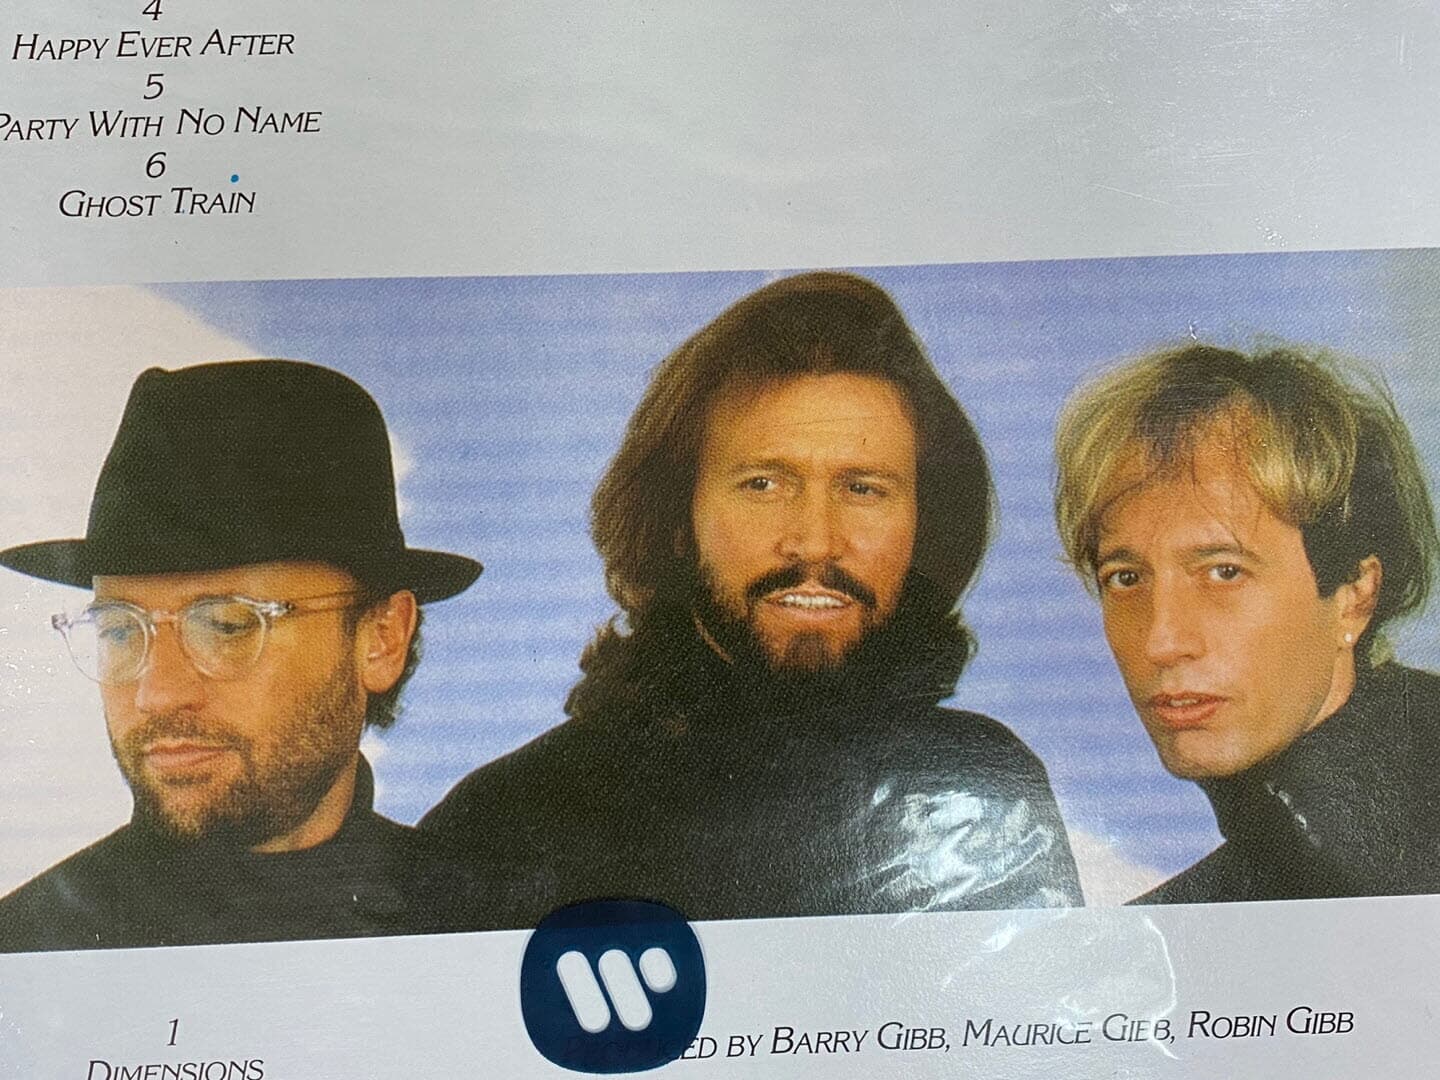 [LP] 비지스 - Bee Gees - High Civilization LP [미개봉] [Warner-라이센스반]